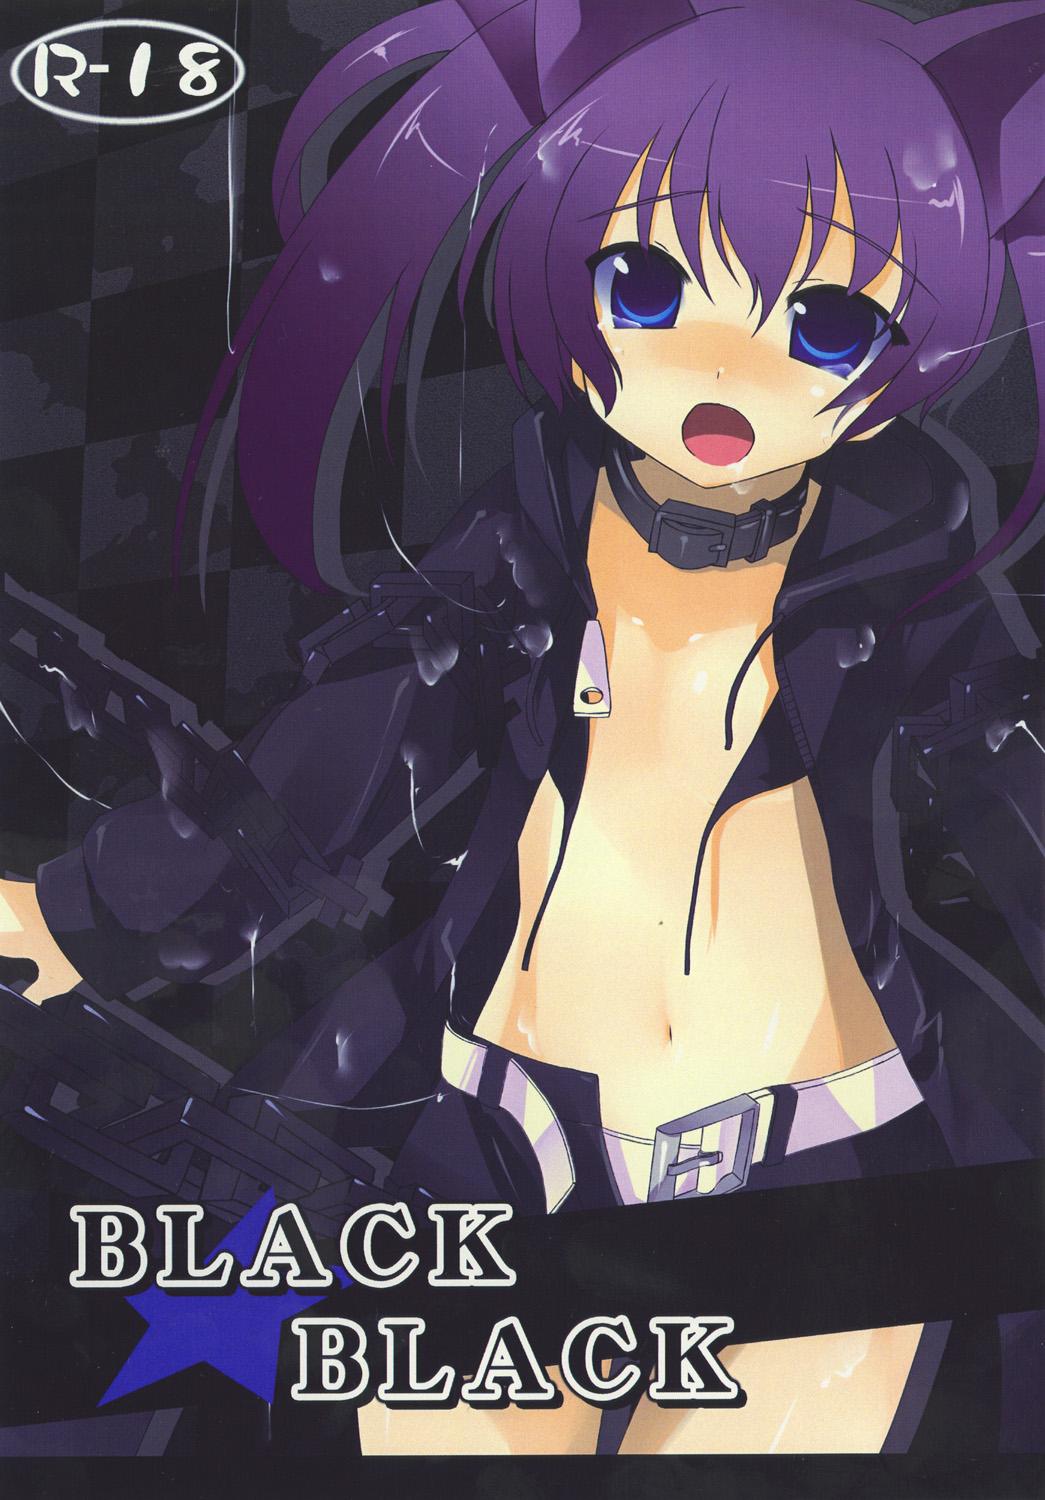 Police BLACK★BLACK - Black rock shooter Negao - Picture 1